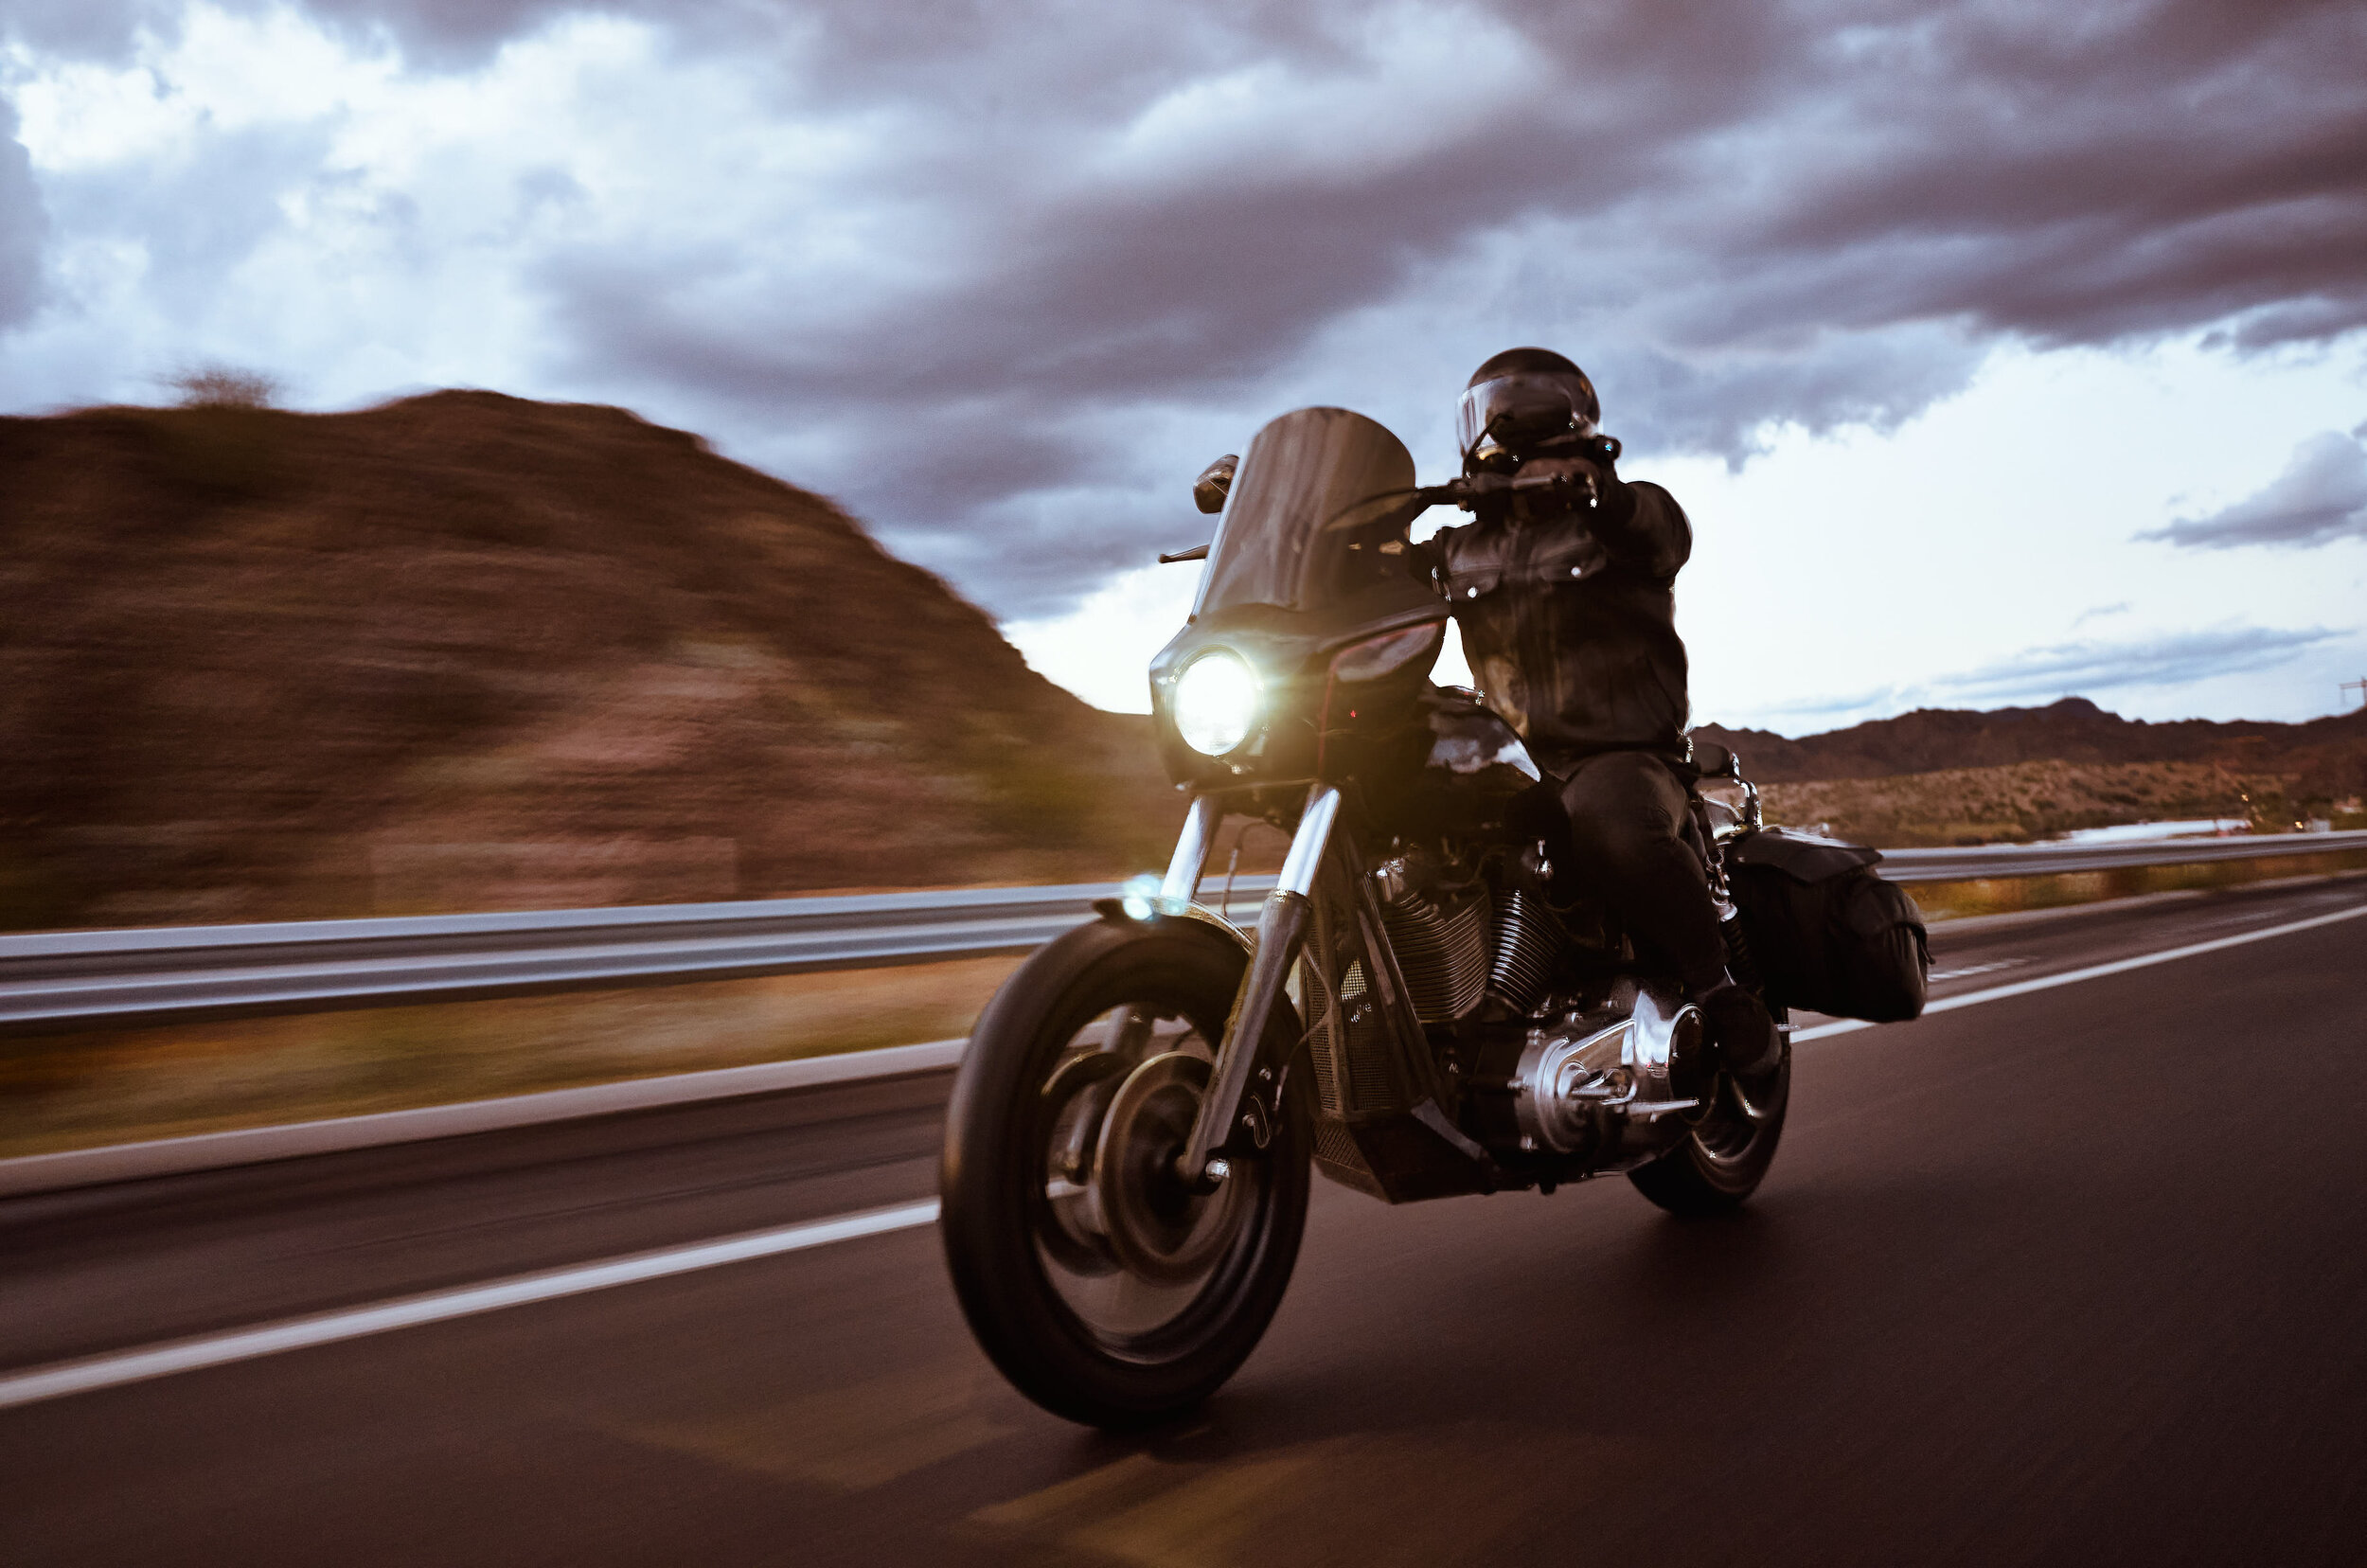 Michael Williams Commercial Photographer Phoenix Arizona. Automotive, motorcycle, Harley,